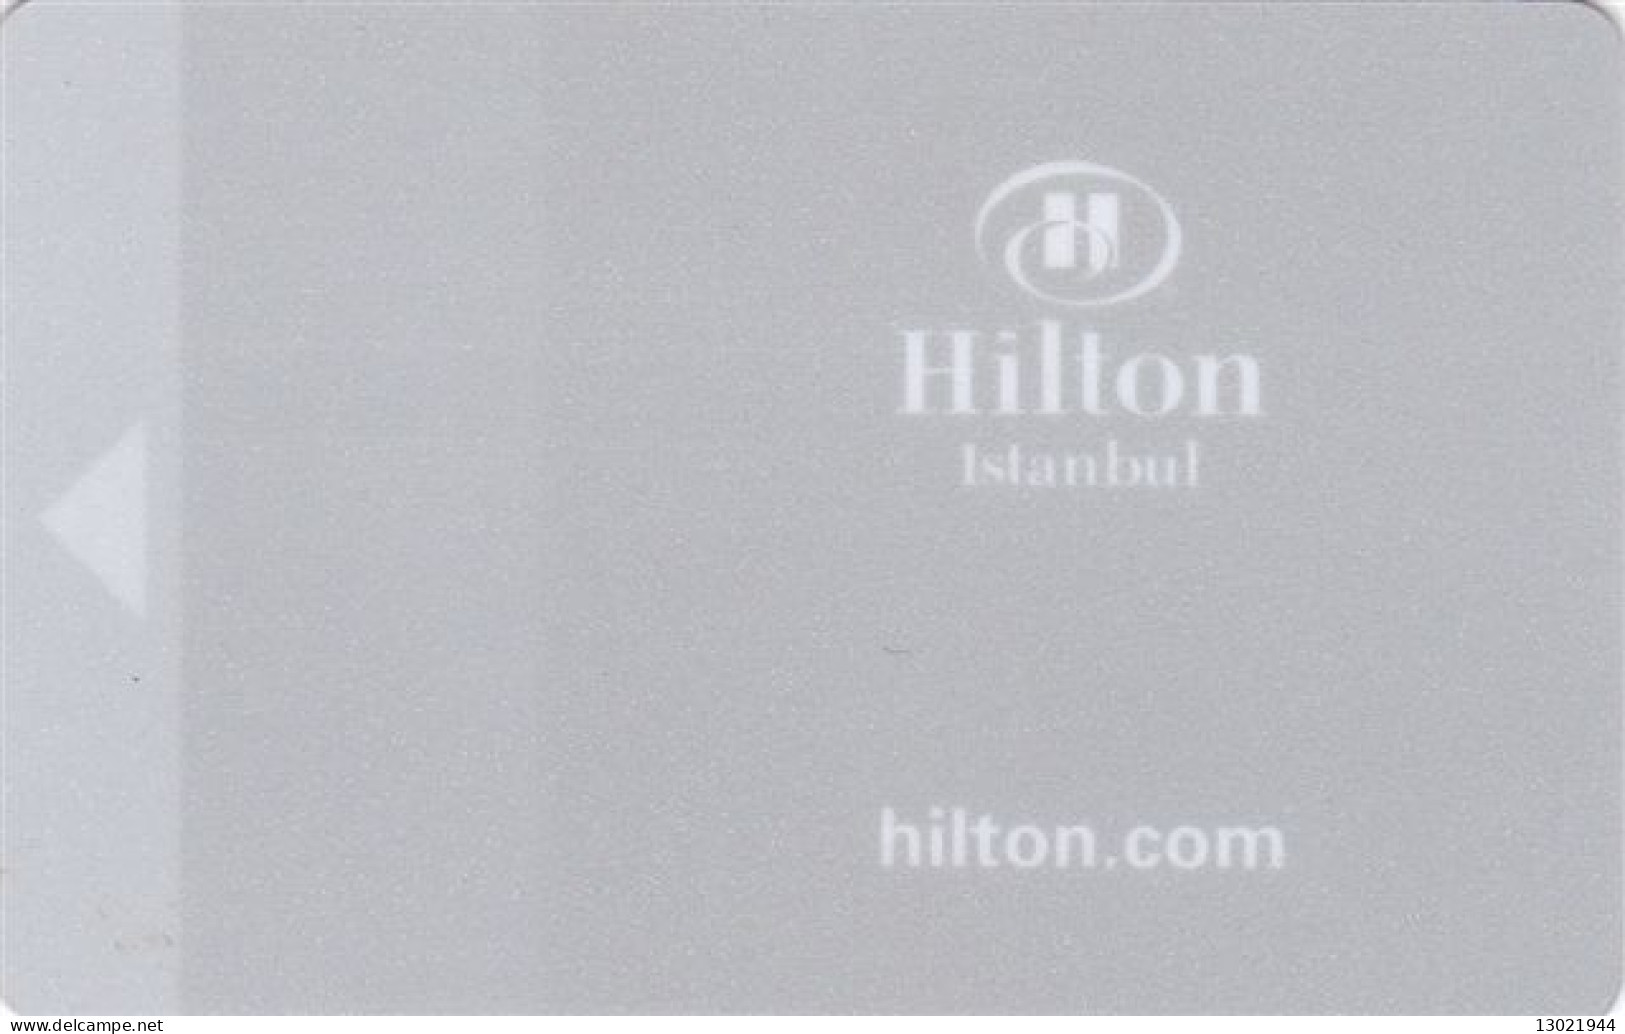 TURCHIA   KEY HOTEL  Hilton Istanbul 3 - Hotelkarten